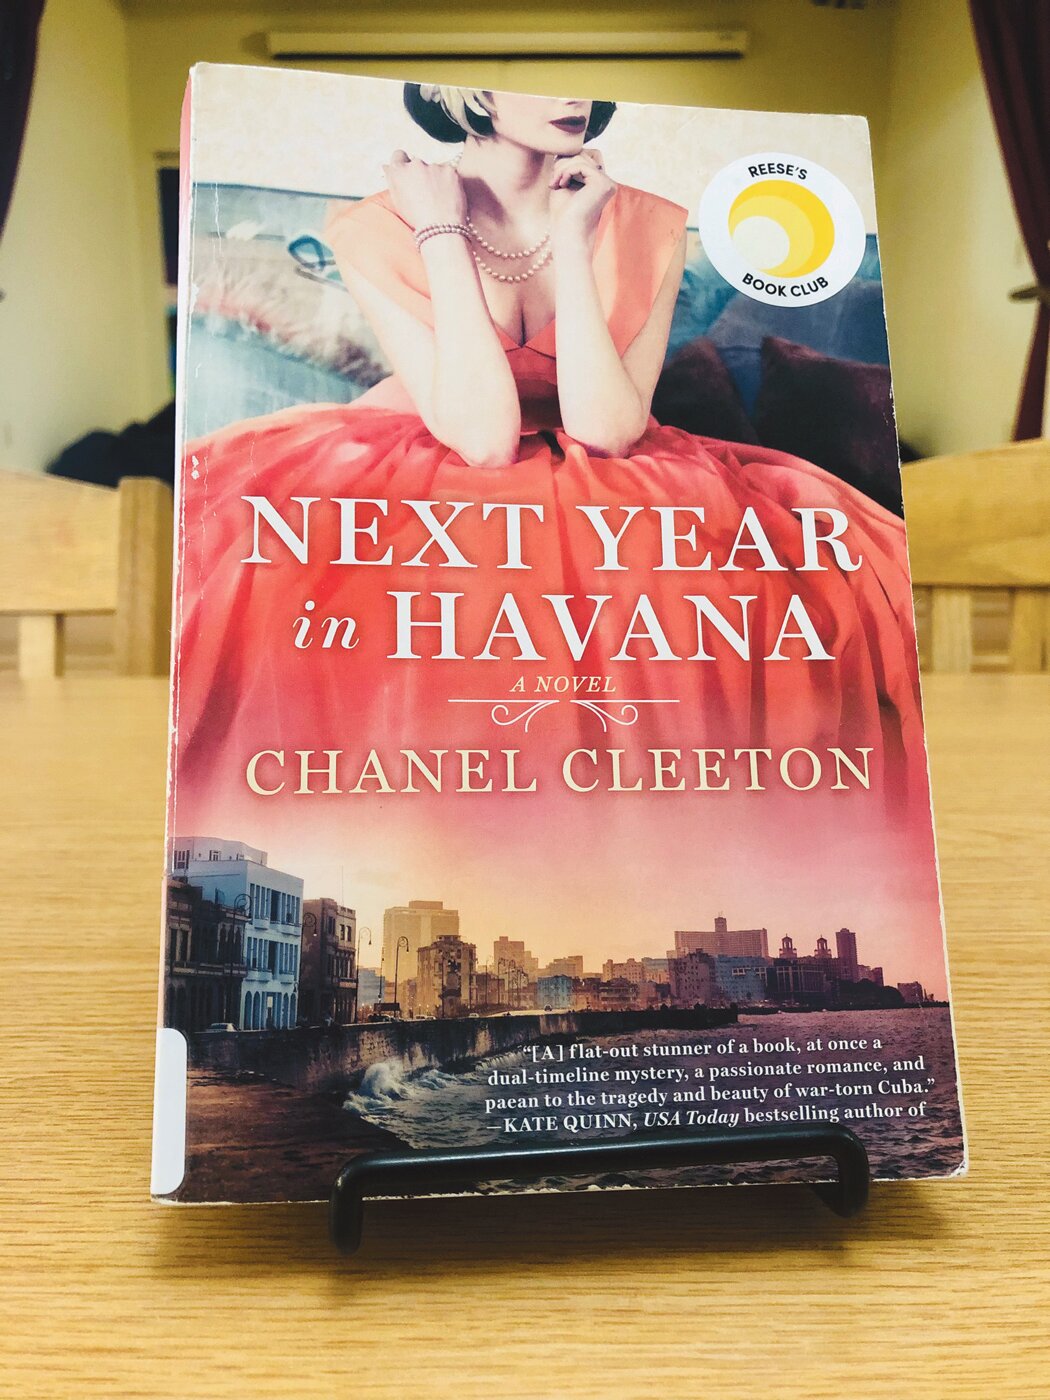 Chelan Library Book Club first choice, “Next Year in Havana”
KATIE LINDERT / WARD MEDIA